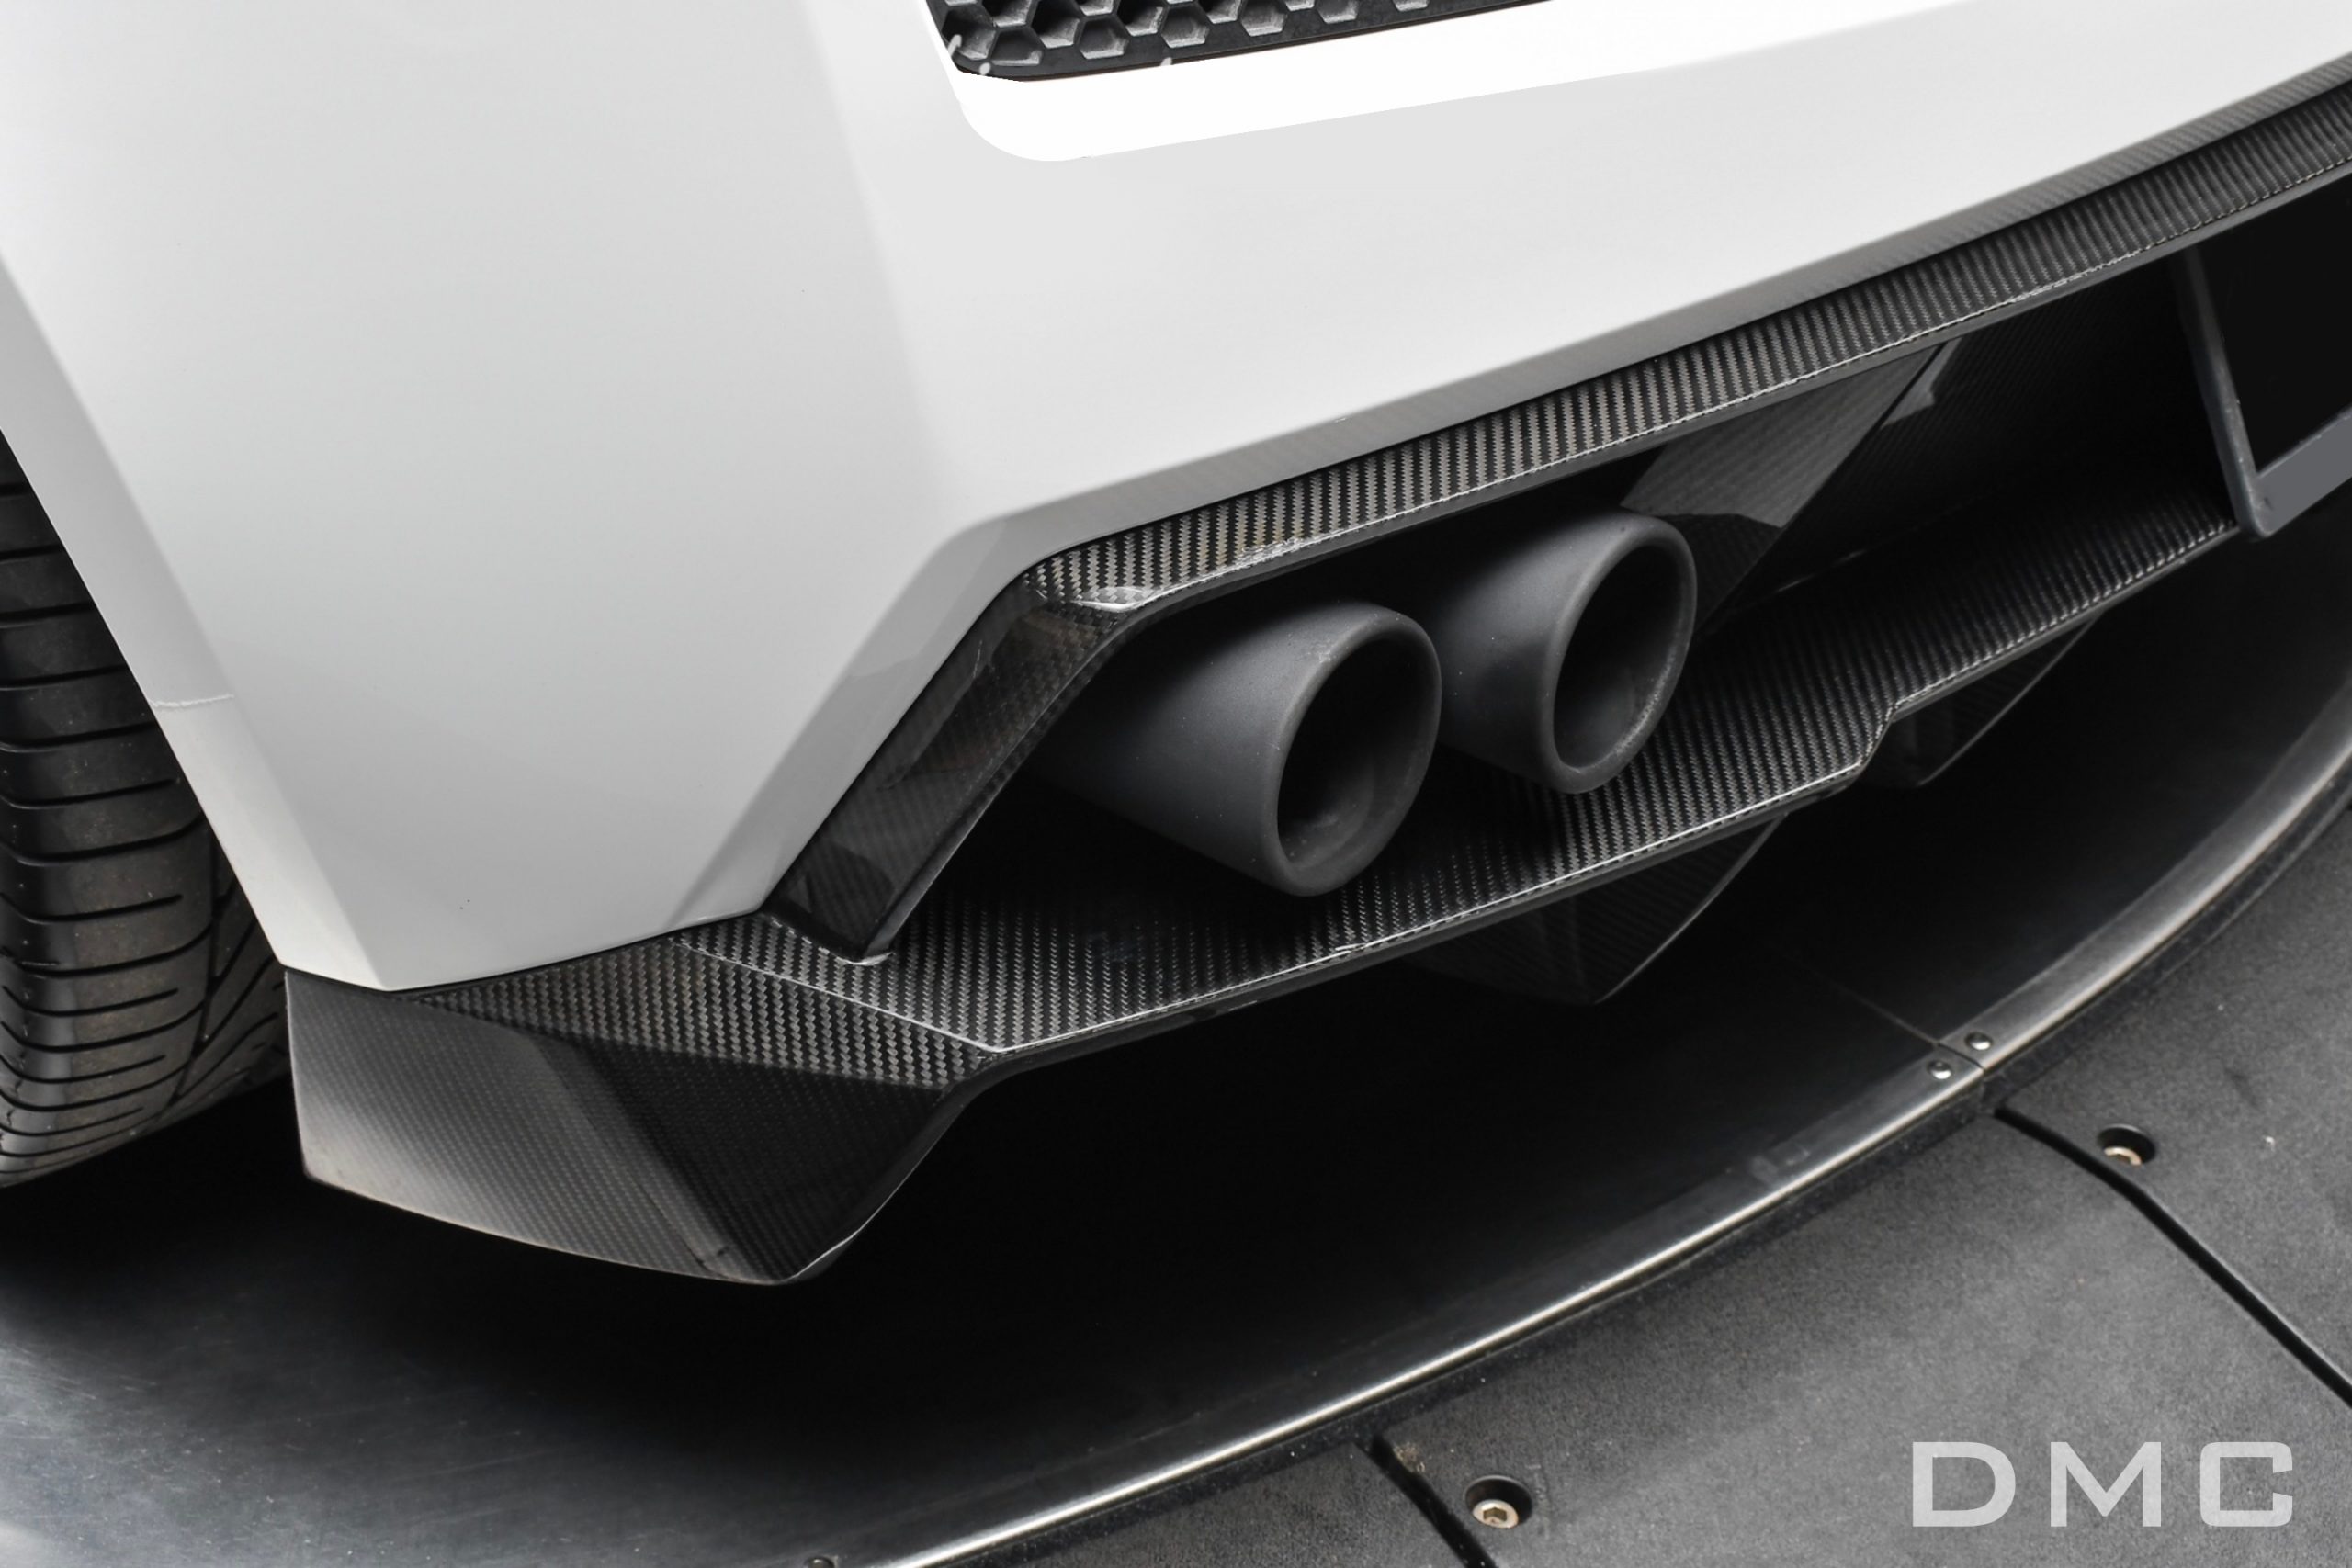 DMC Lamborghini Gallardo Toro Rear Diffuser Carbon Fiber, fits the LP560  Rear Bumper in LP570 Style - DMC